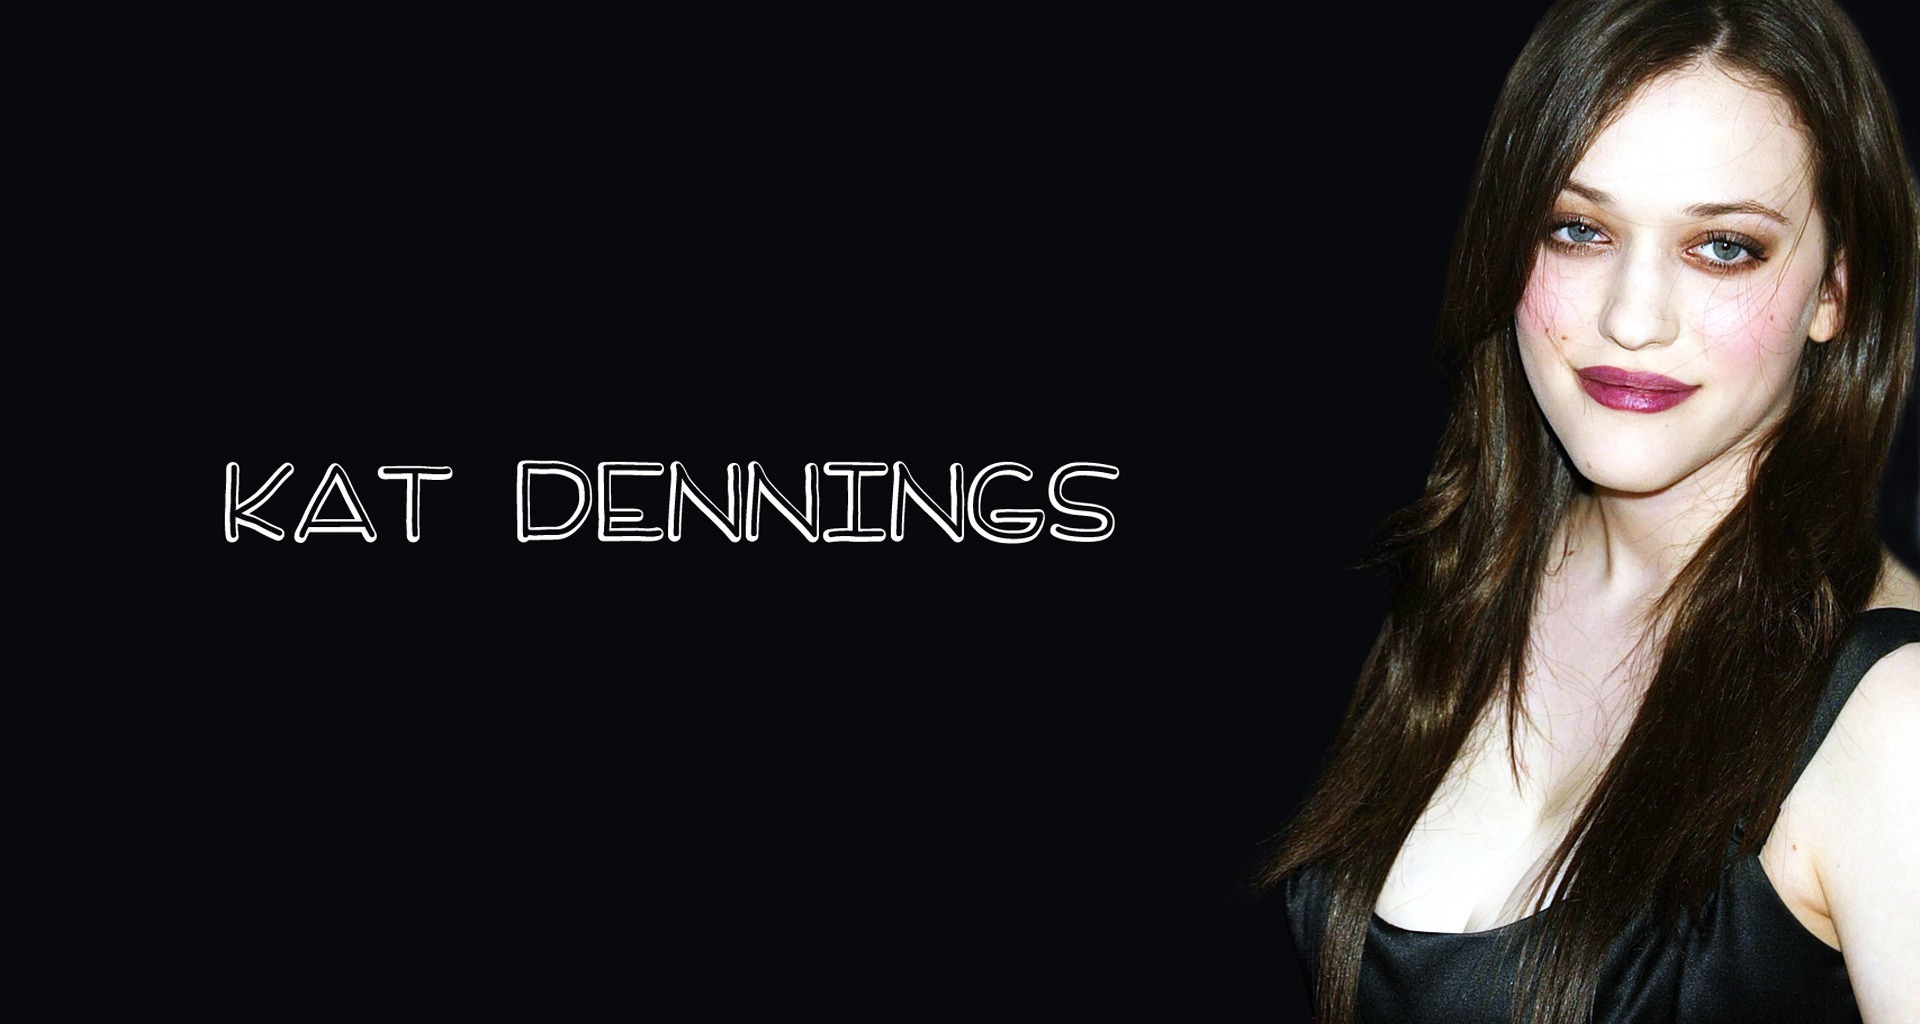 Kat Dennings Wallpaper HD Free Download | New HD Wallpapers Download